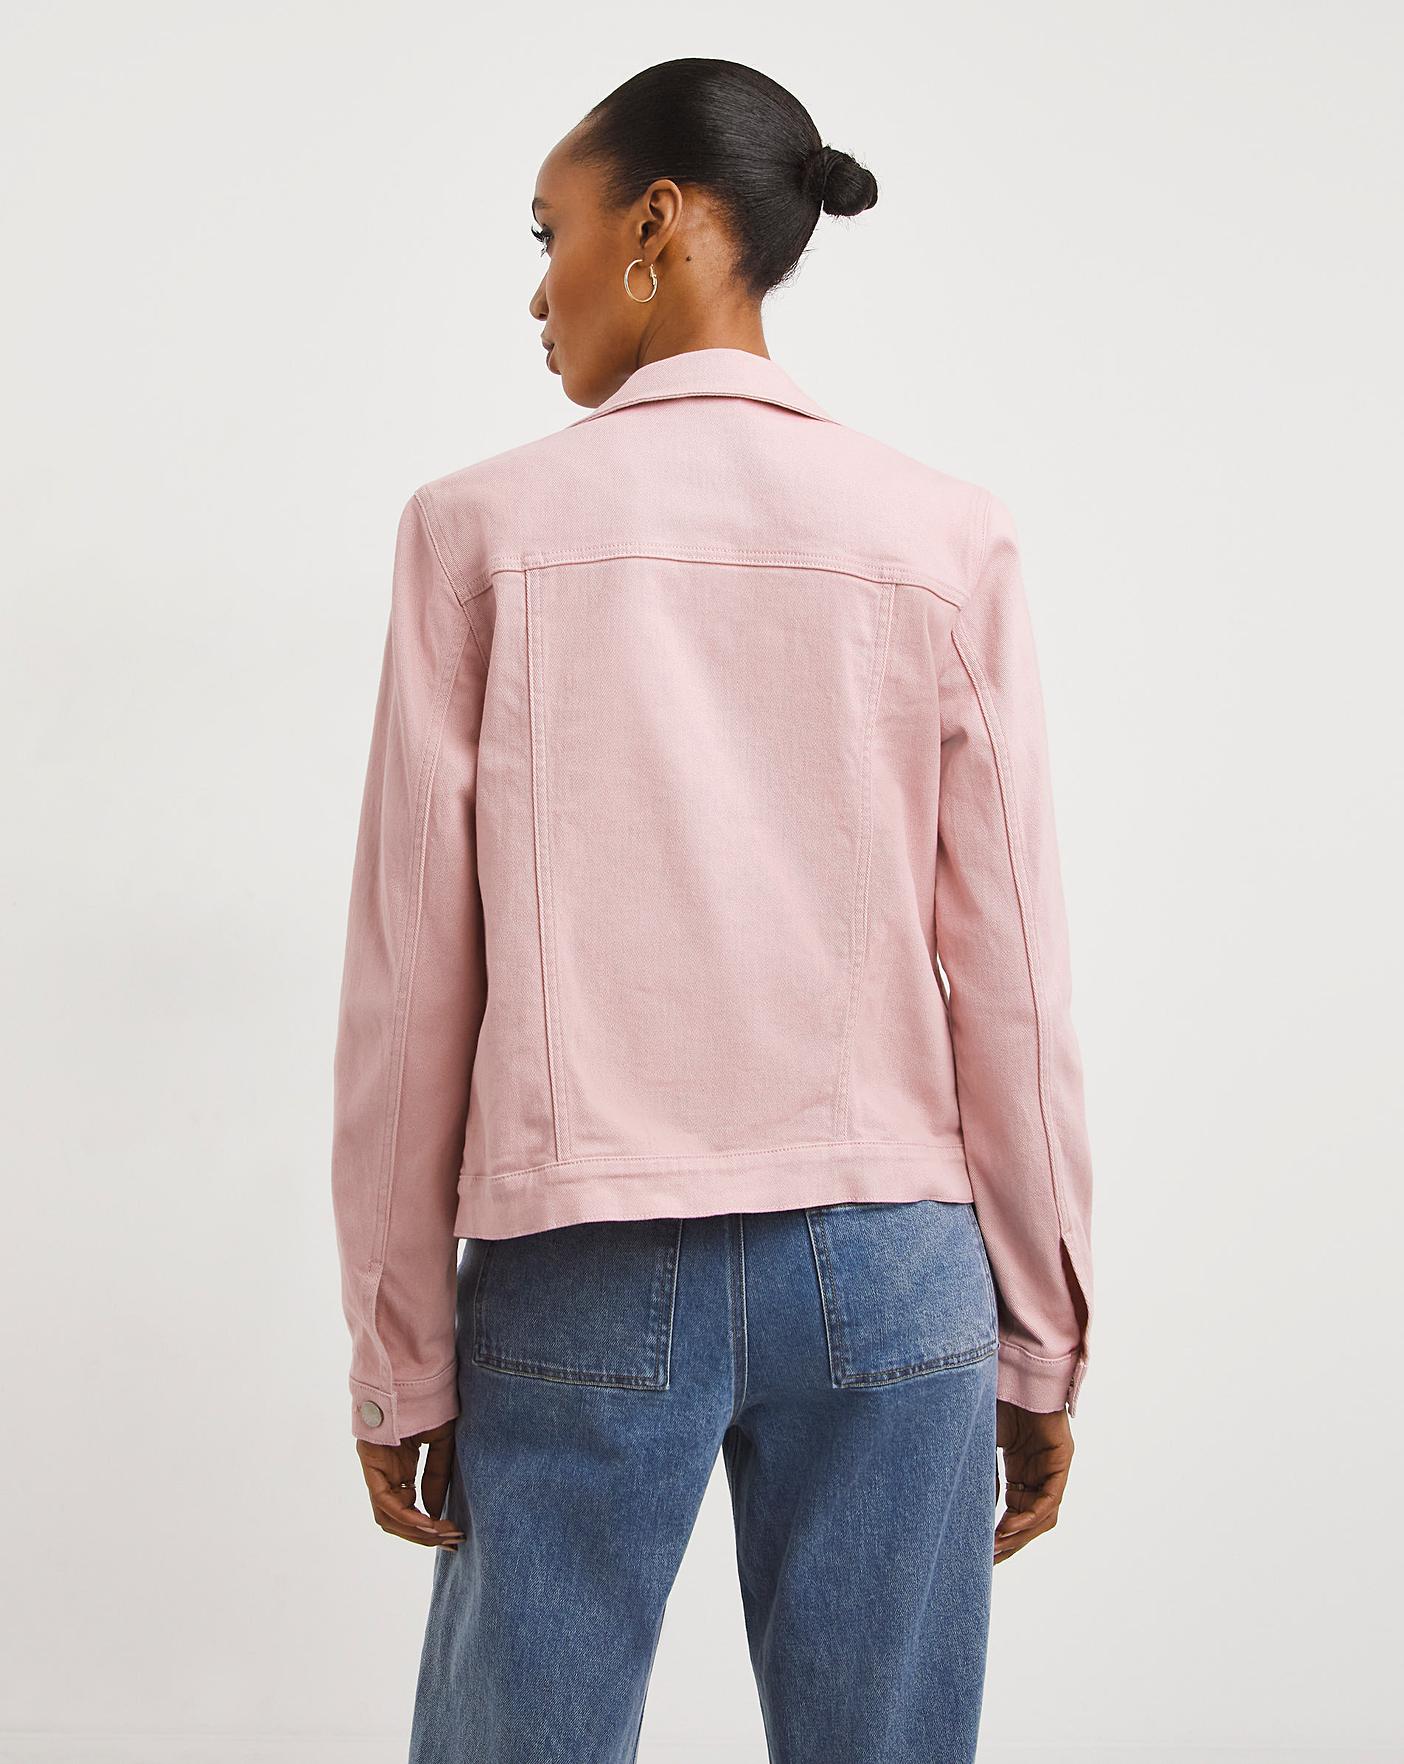 Buy now mens pink slim fit full sleeve Jacket Wrogn by virat  kohliWLJK1362